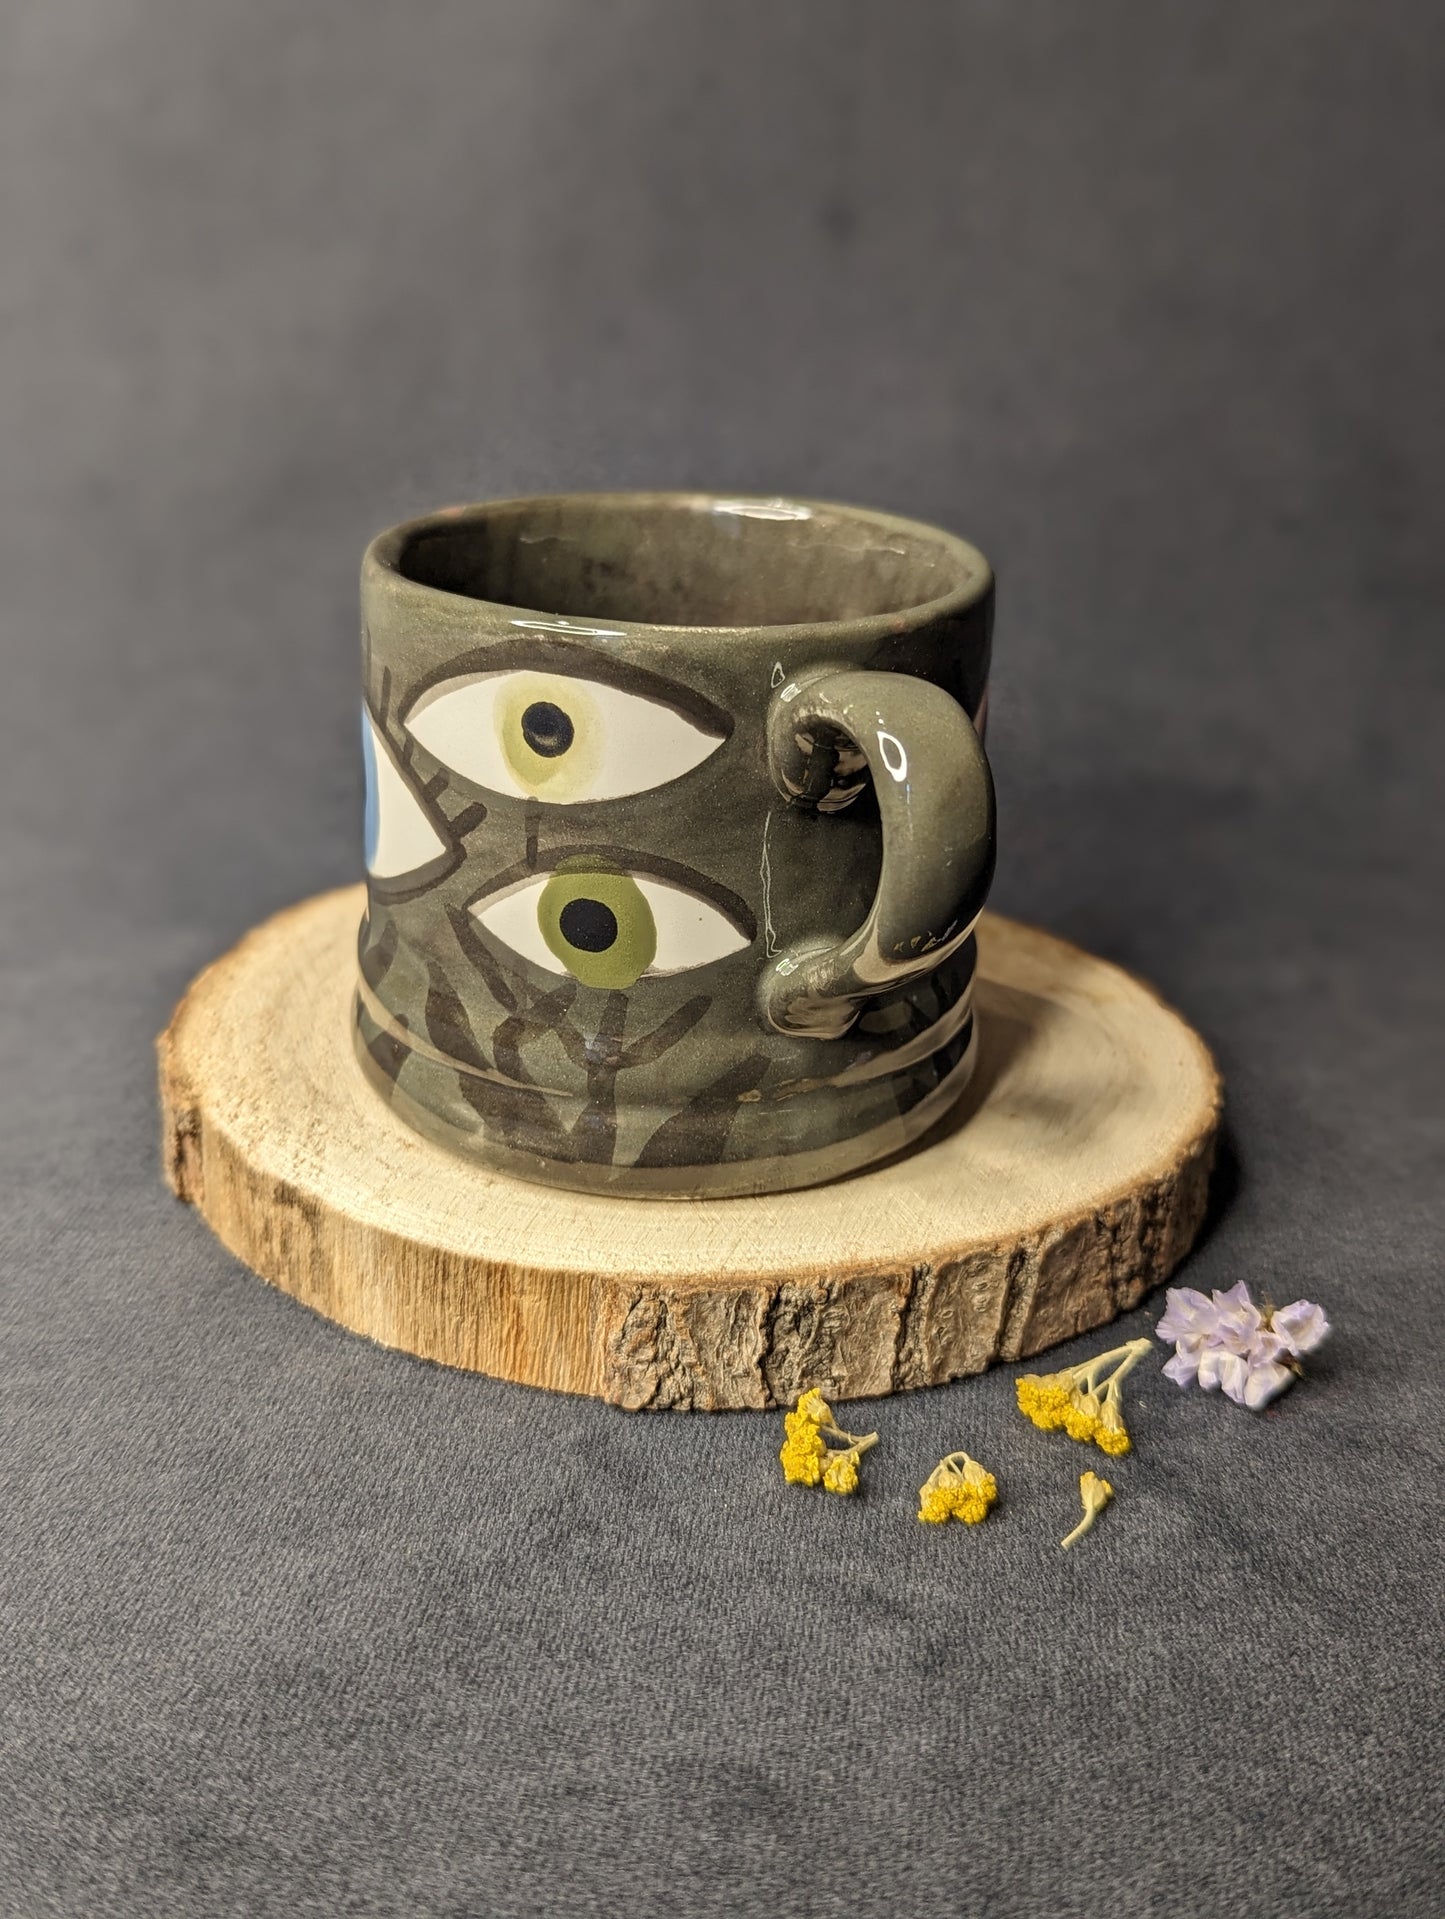 Watchful Eye Mug by Ciara Veronica Dunne